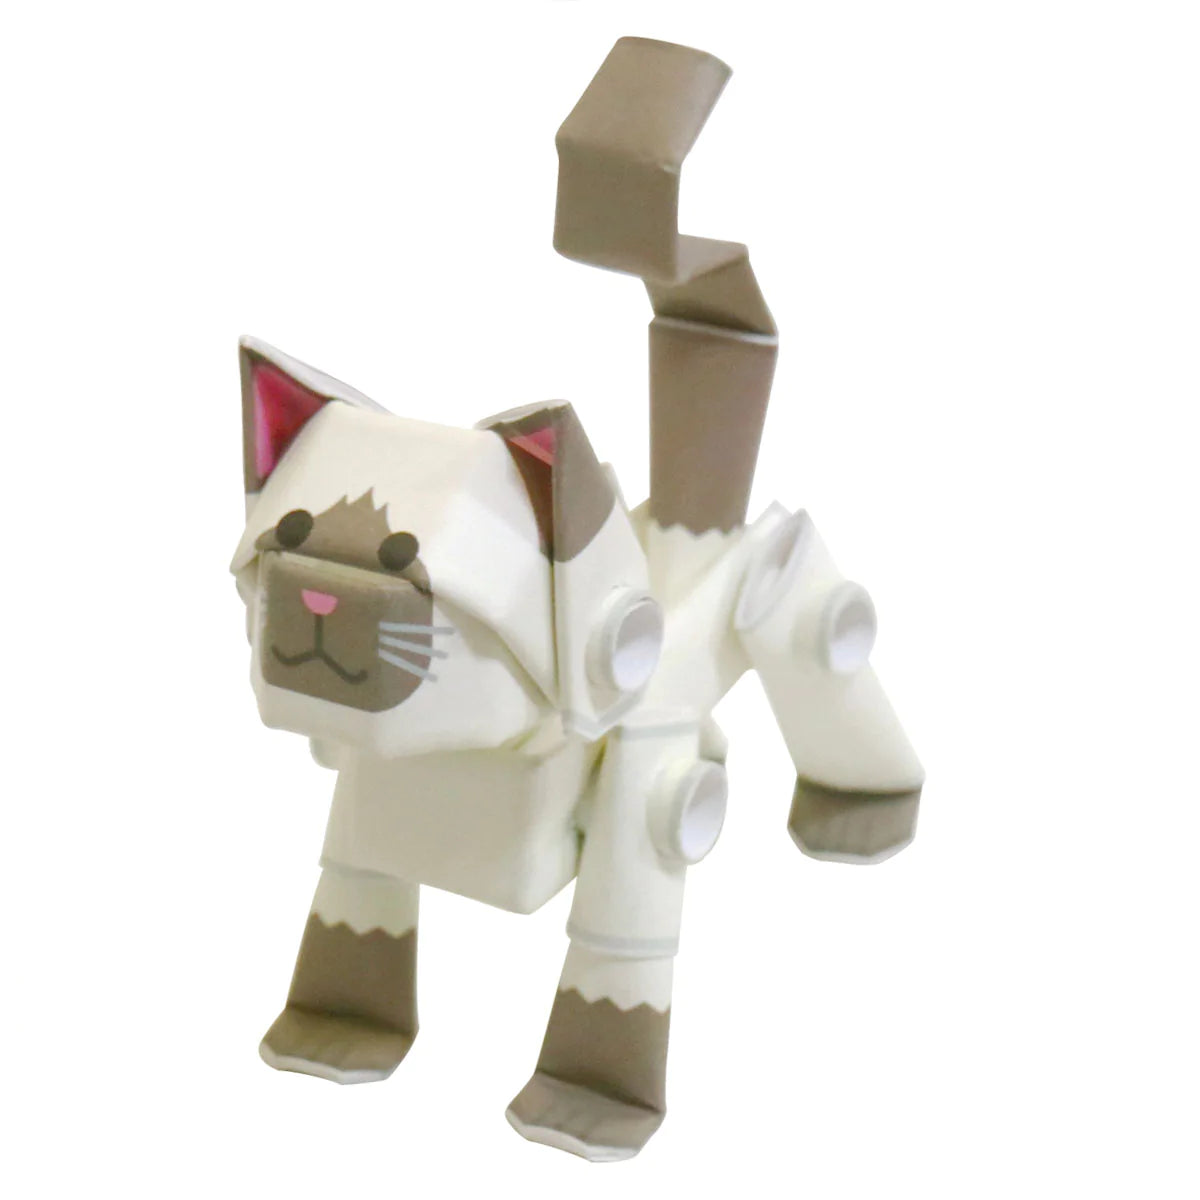 minecraft papercraft cats